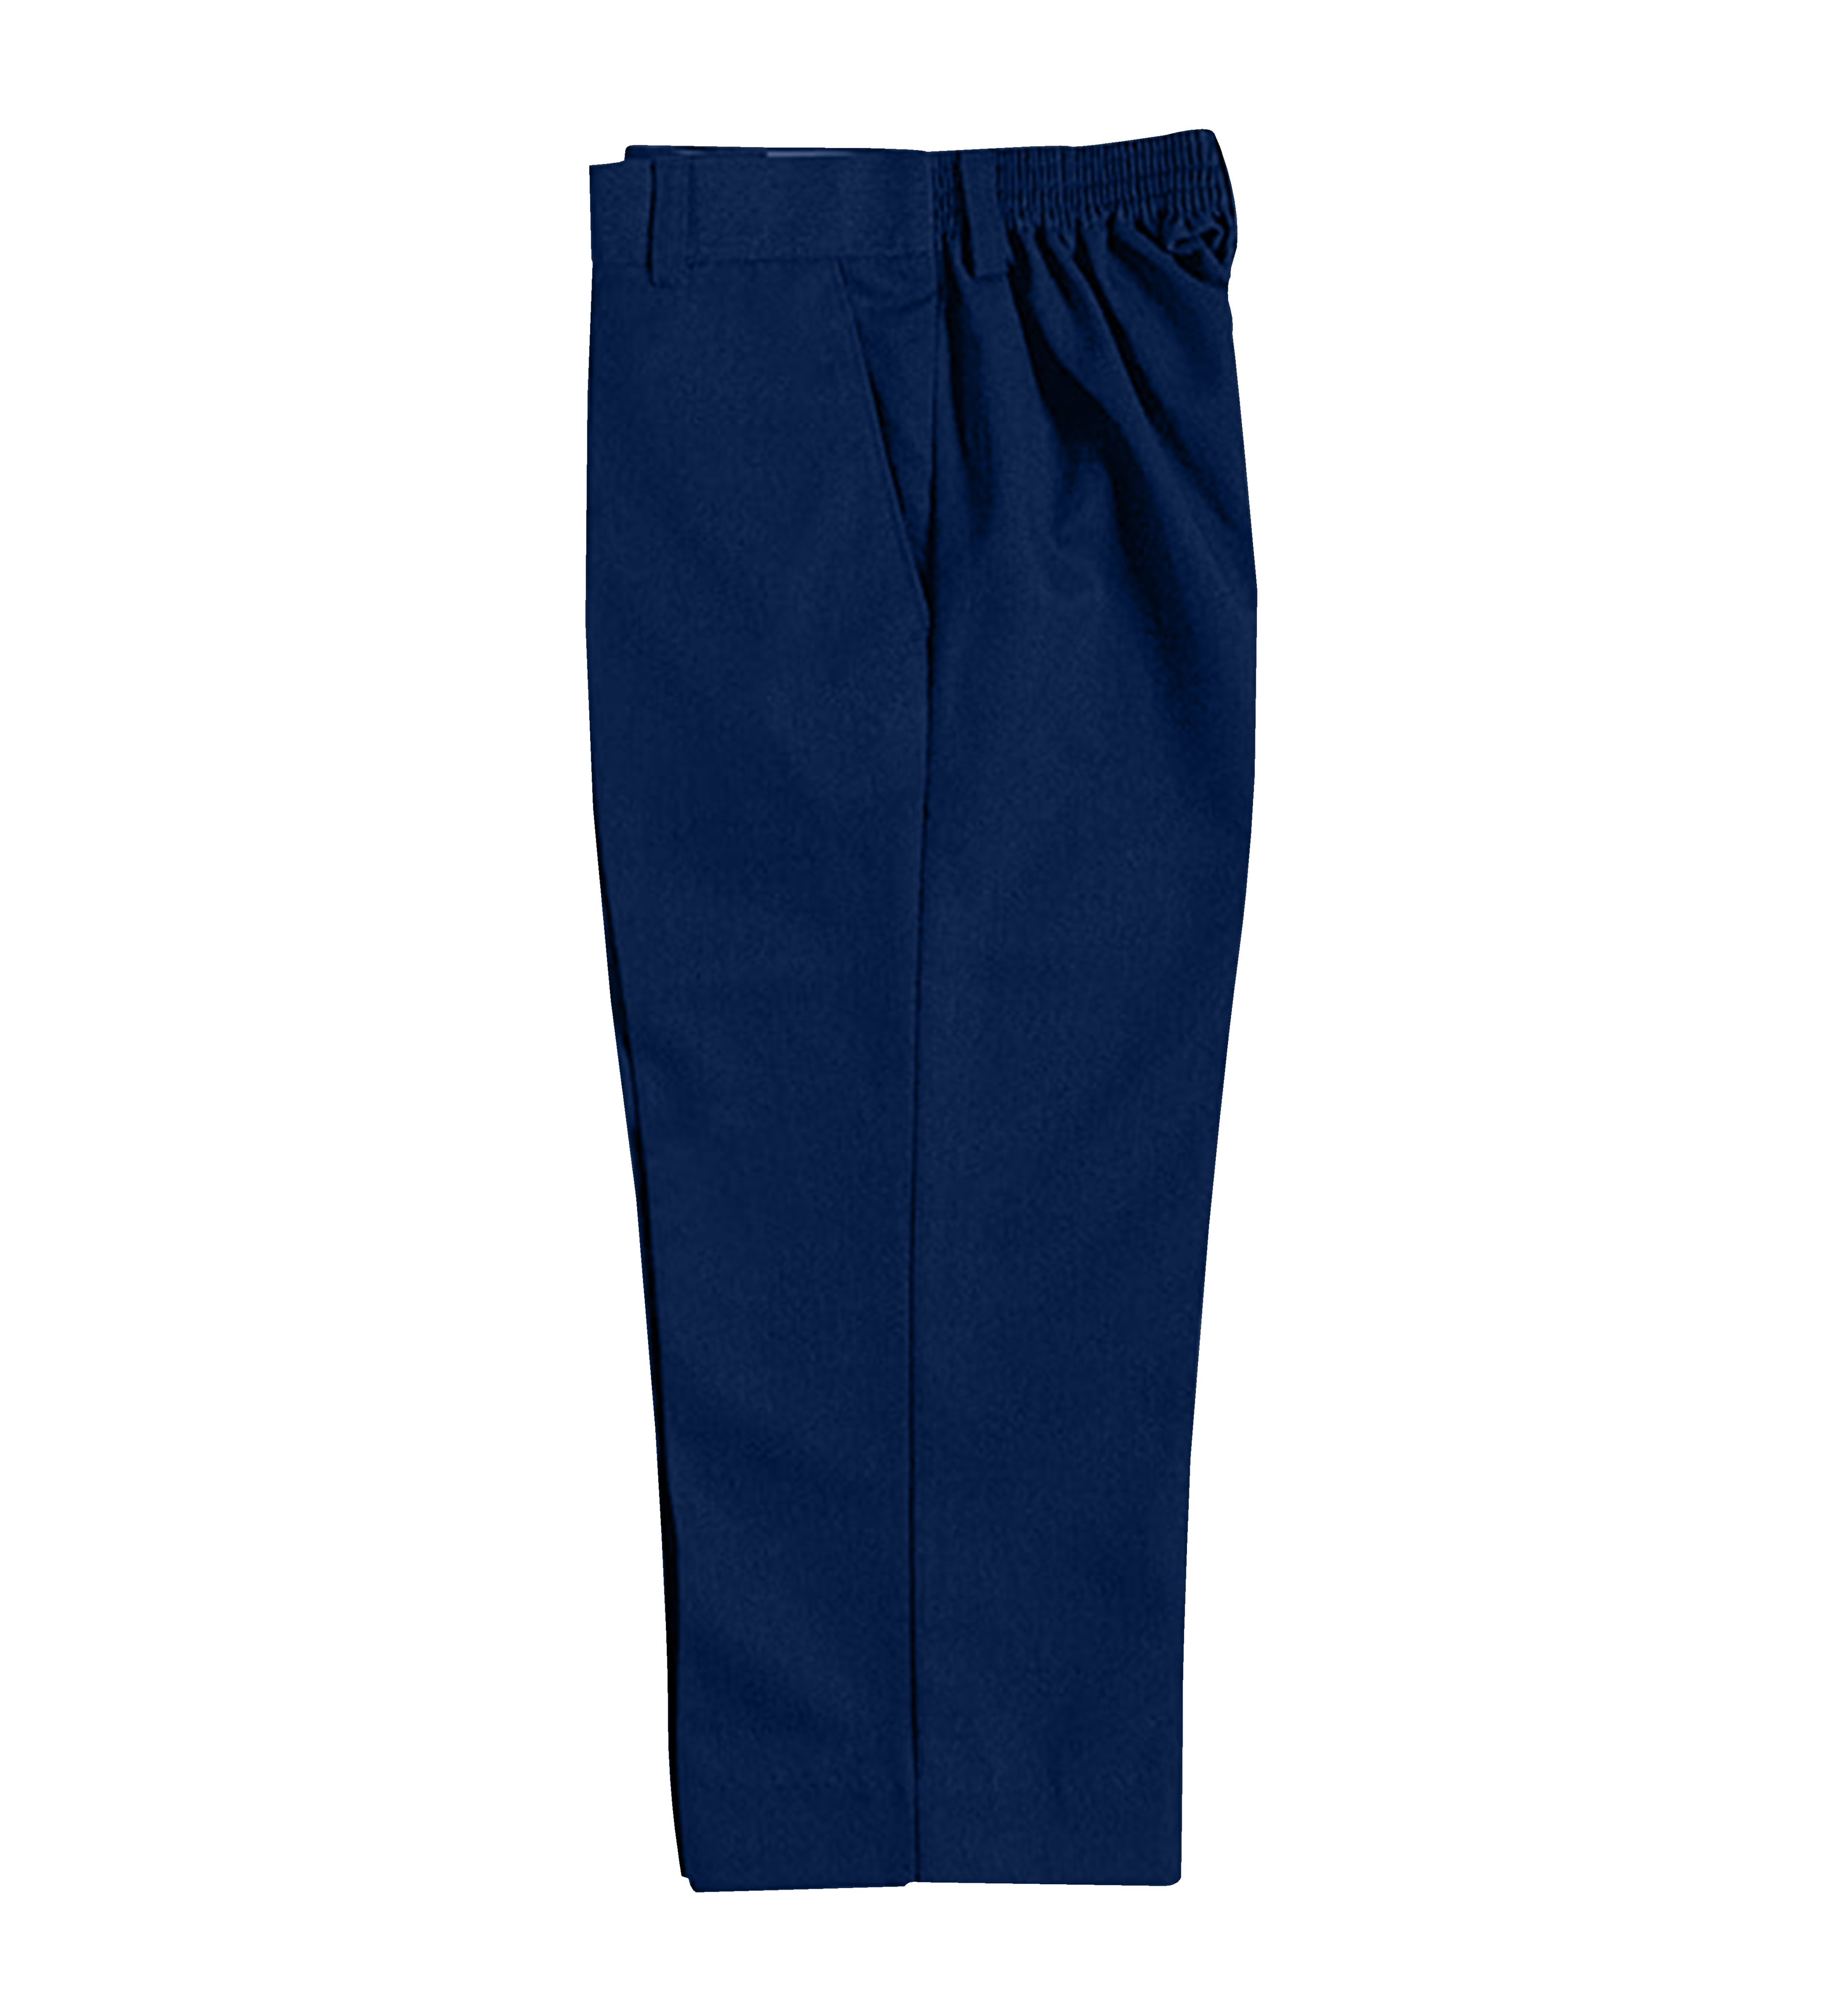 The American School Elastic Pants - Youniform